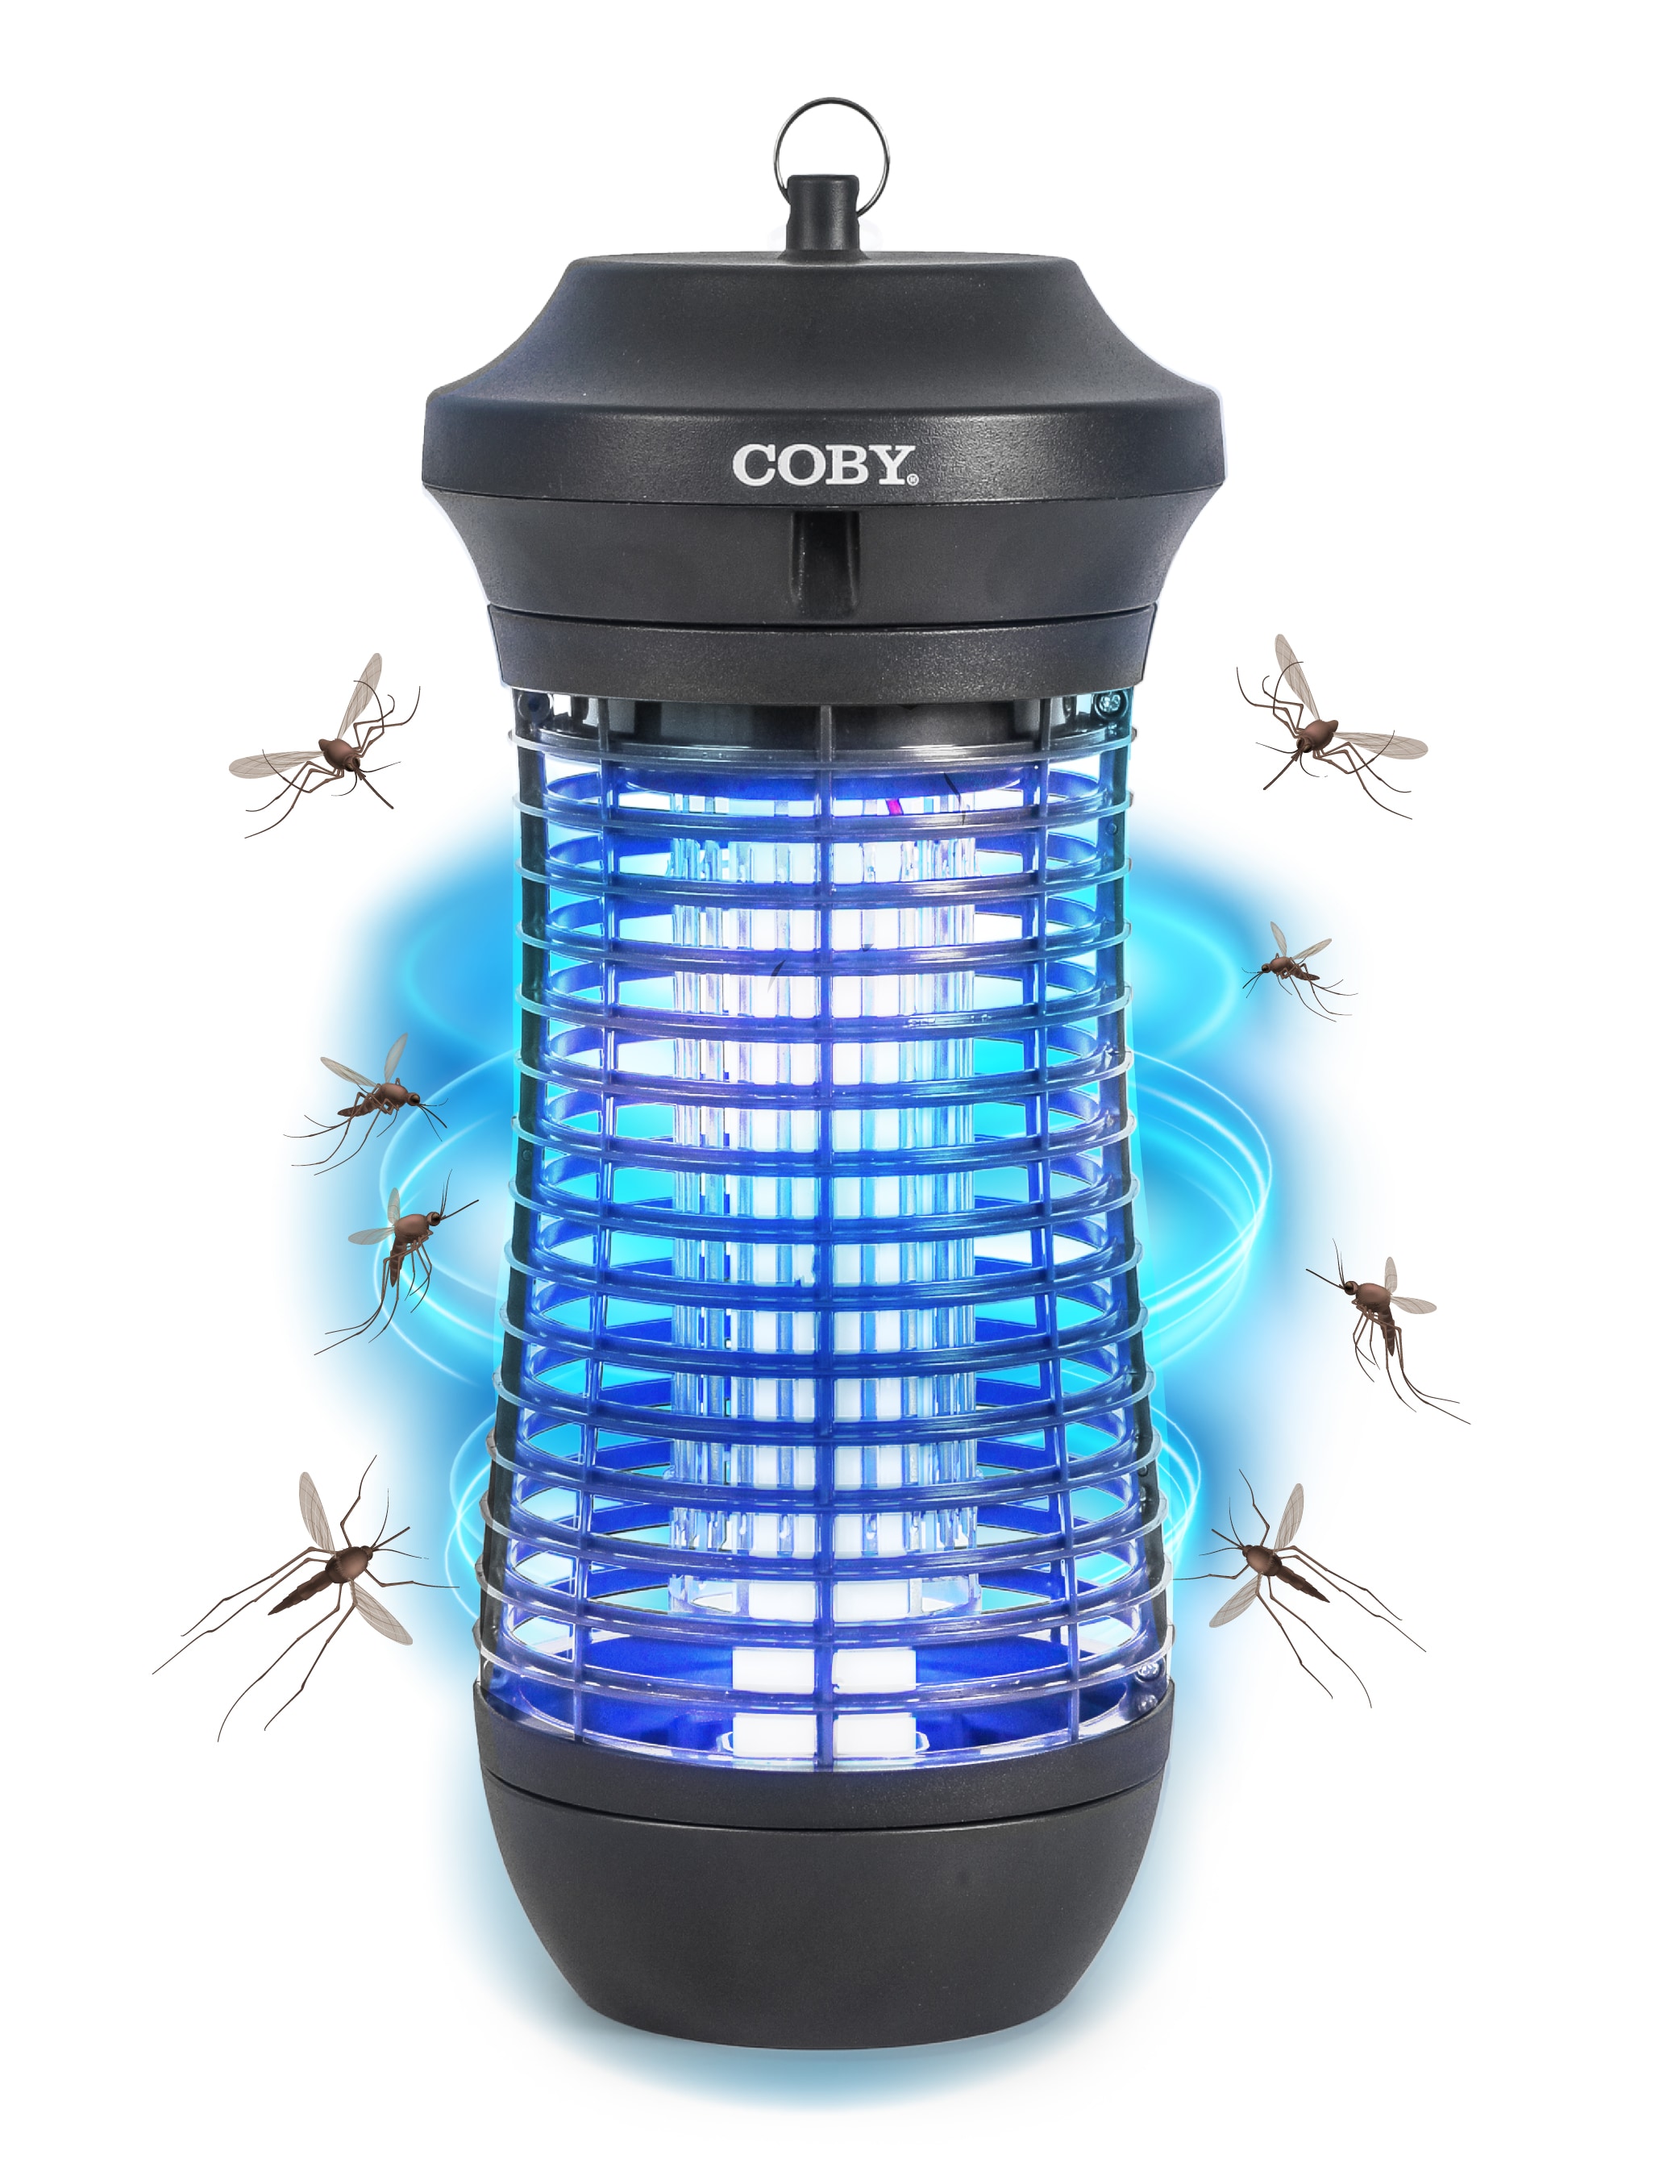  BLACK+DECKER Bug Zapper Mosquito Killer Indoor and Outdoor Fly  Zapper Half Acre Coverage : Patio, Lawn & Garden